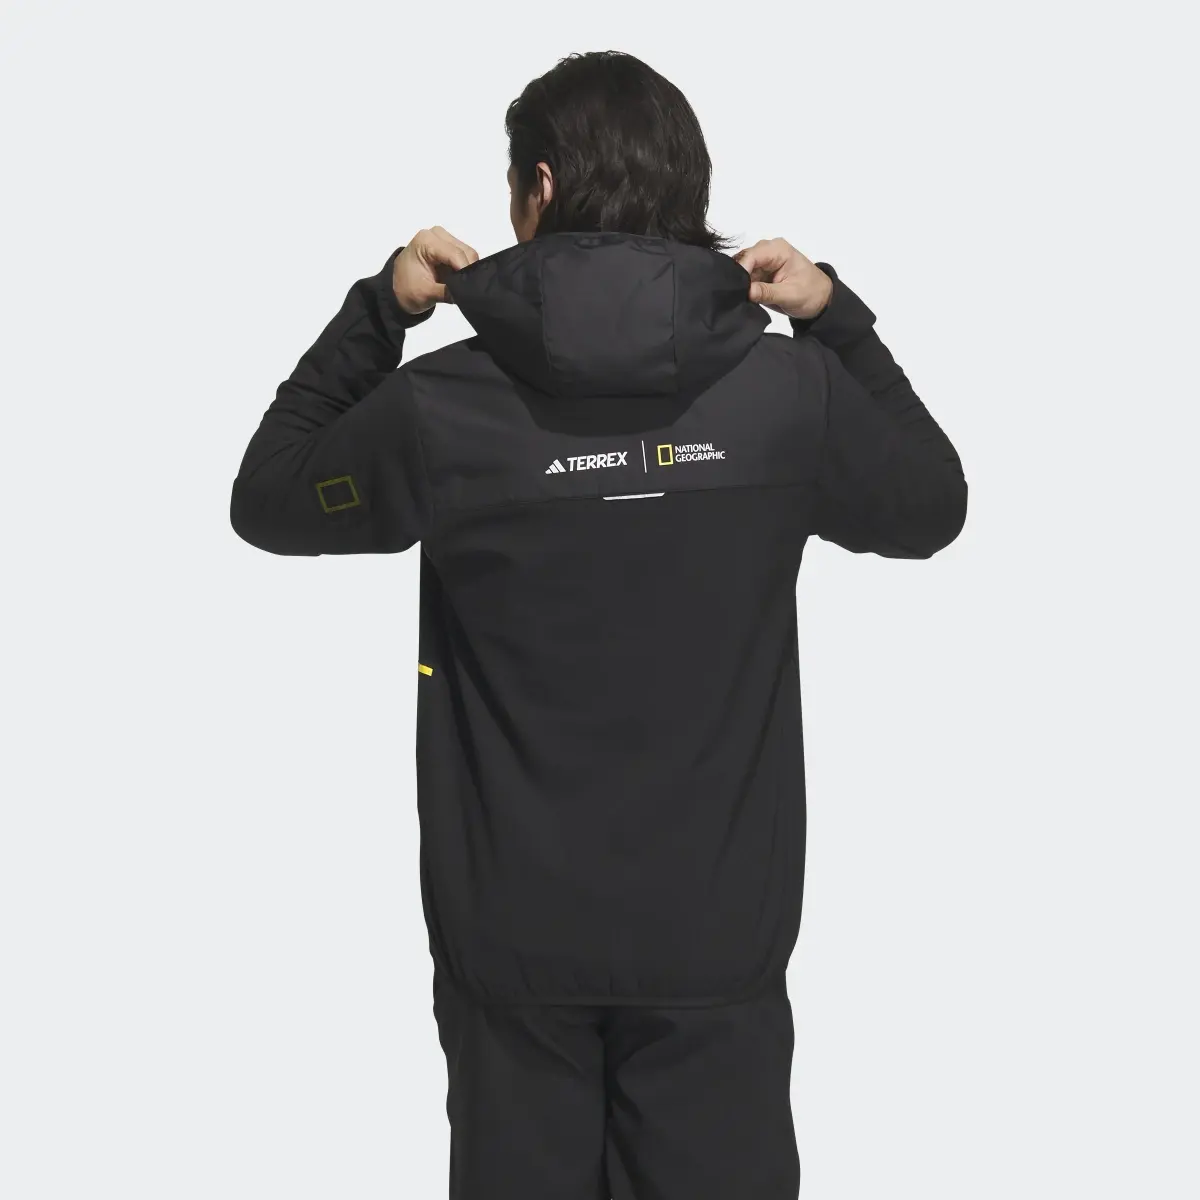 Adidas National Geographic Soft Shell Jacket. 3